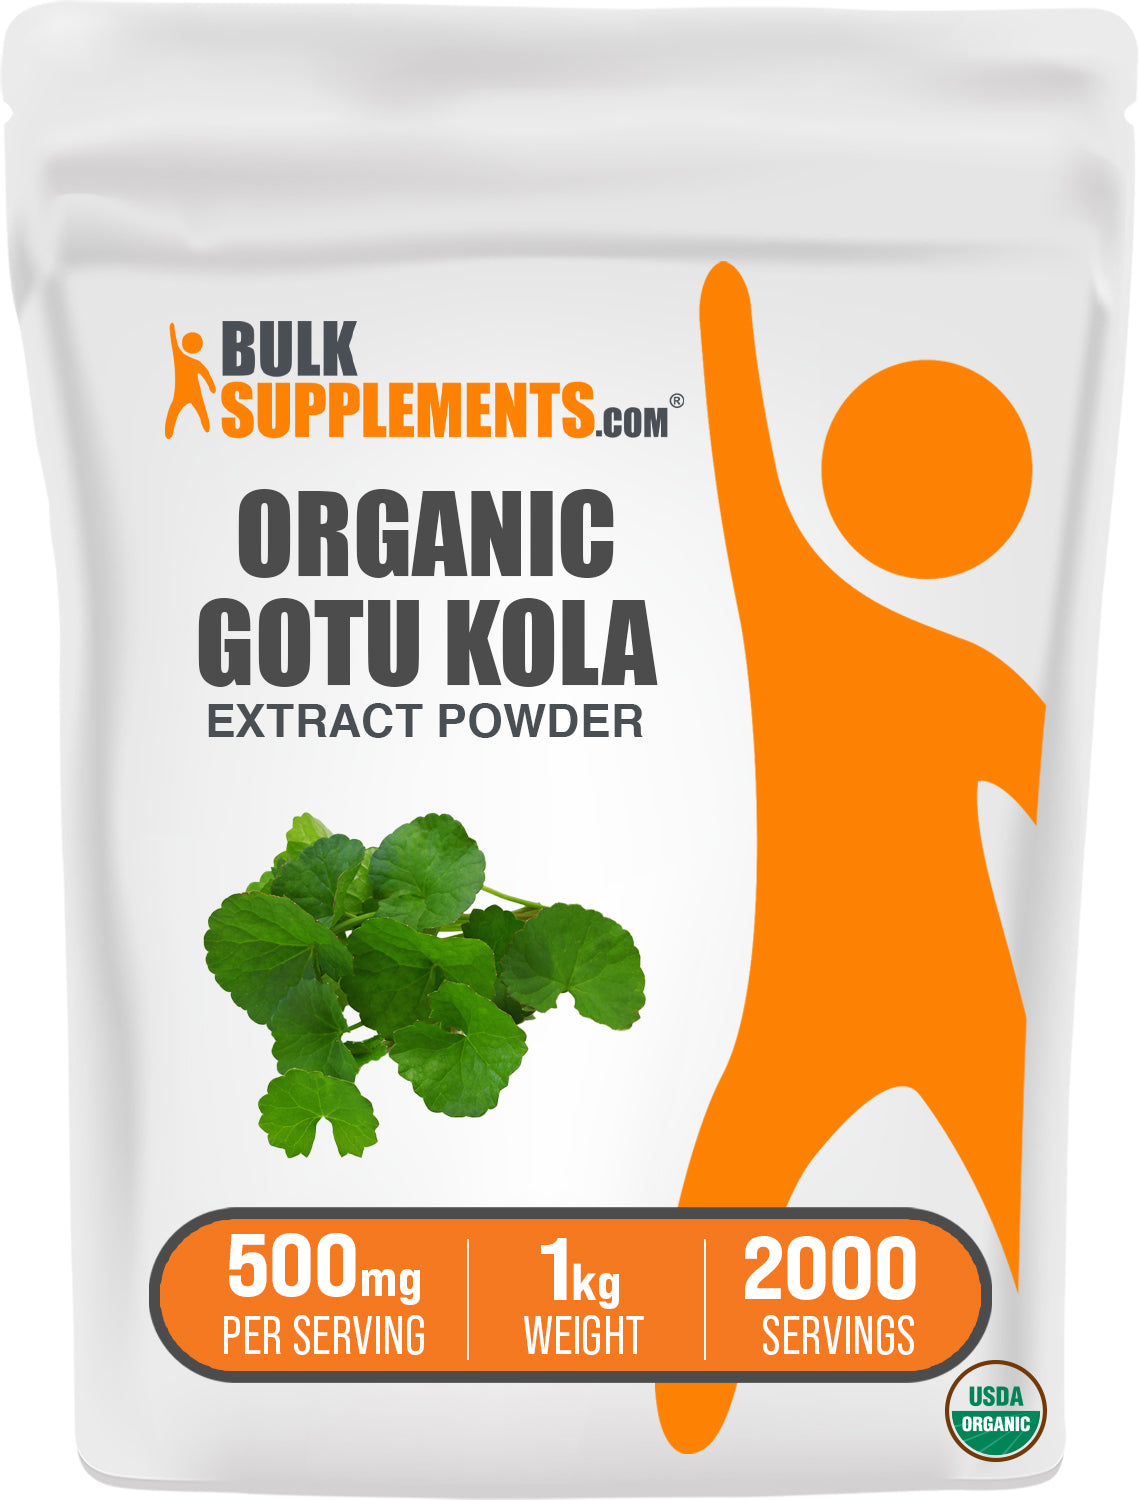 BulkSupplements.com organic gotu kola extract powder 1kg bag